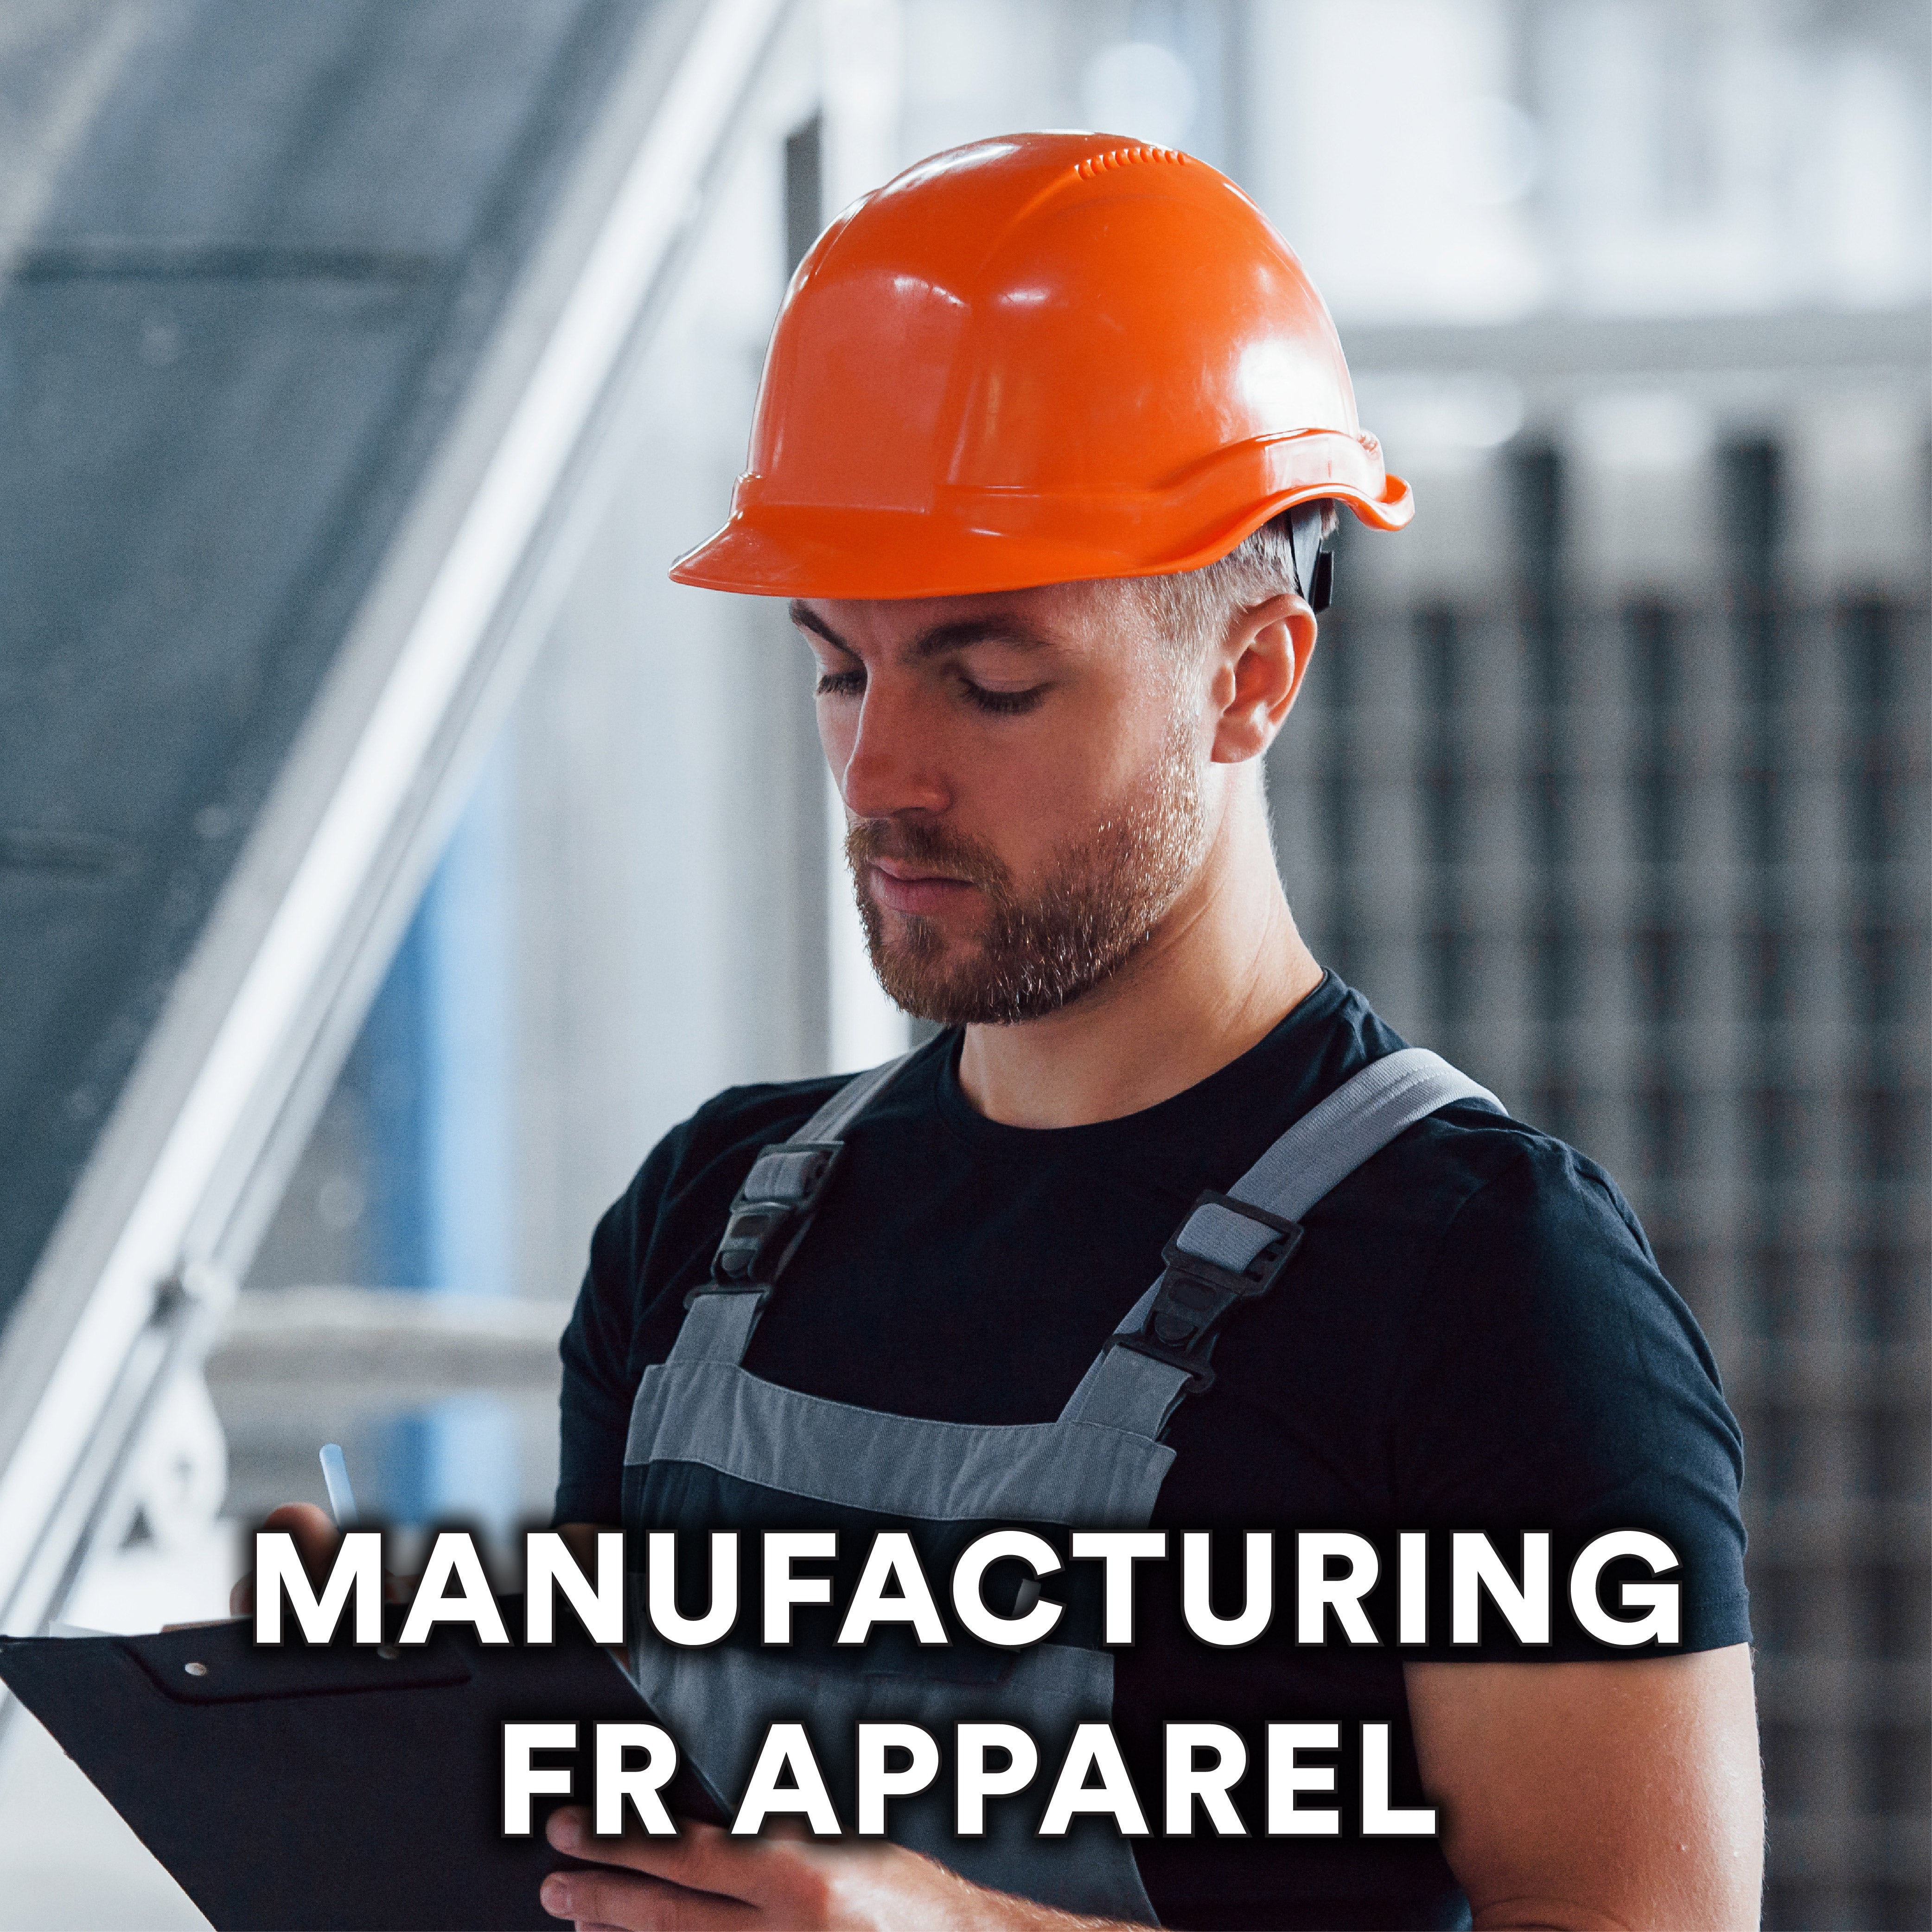 Manufacturing FR Apparel